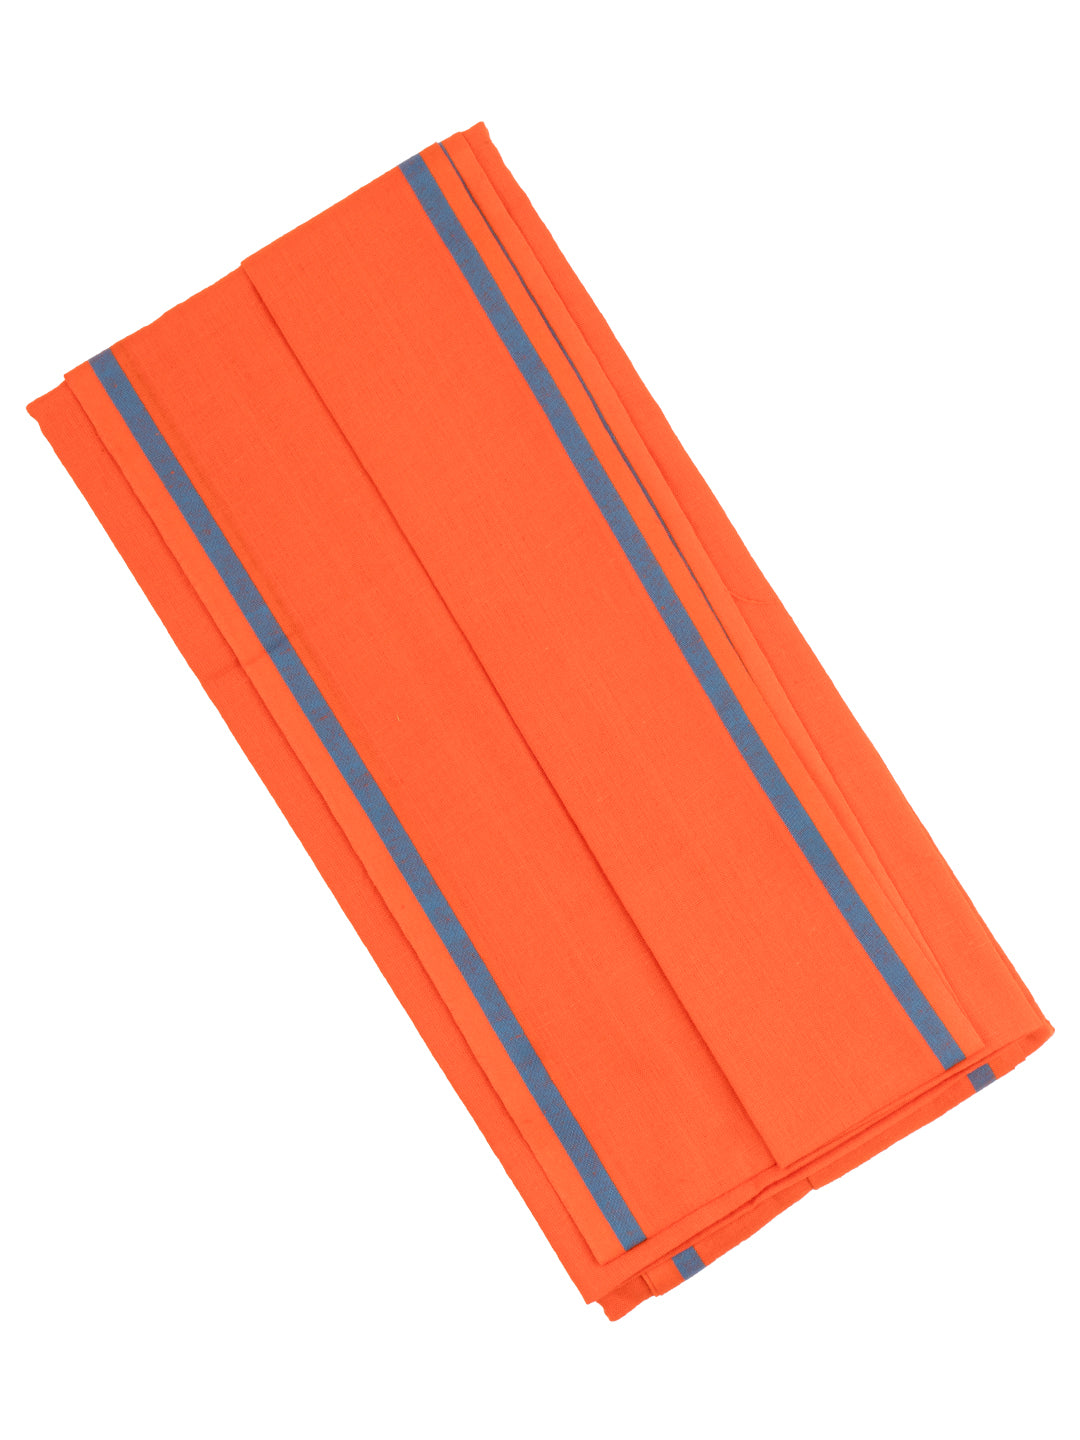 Roland Orange Towel -2Pcs Combo Pack (Assorted Border)